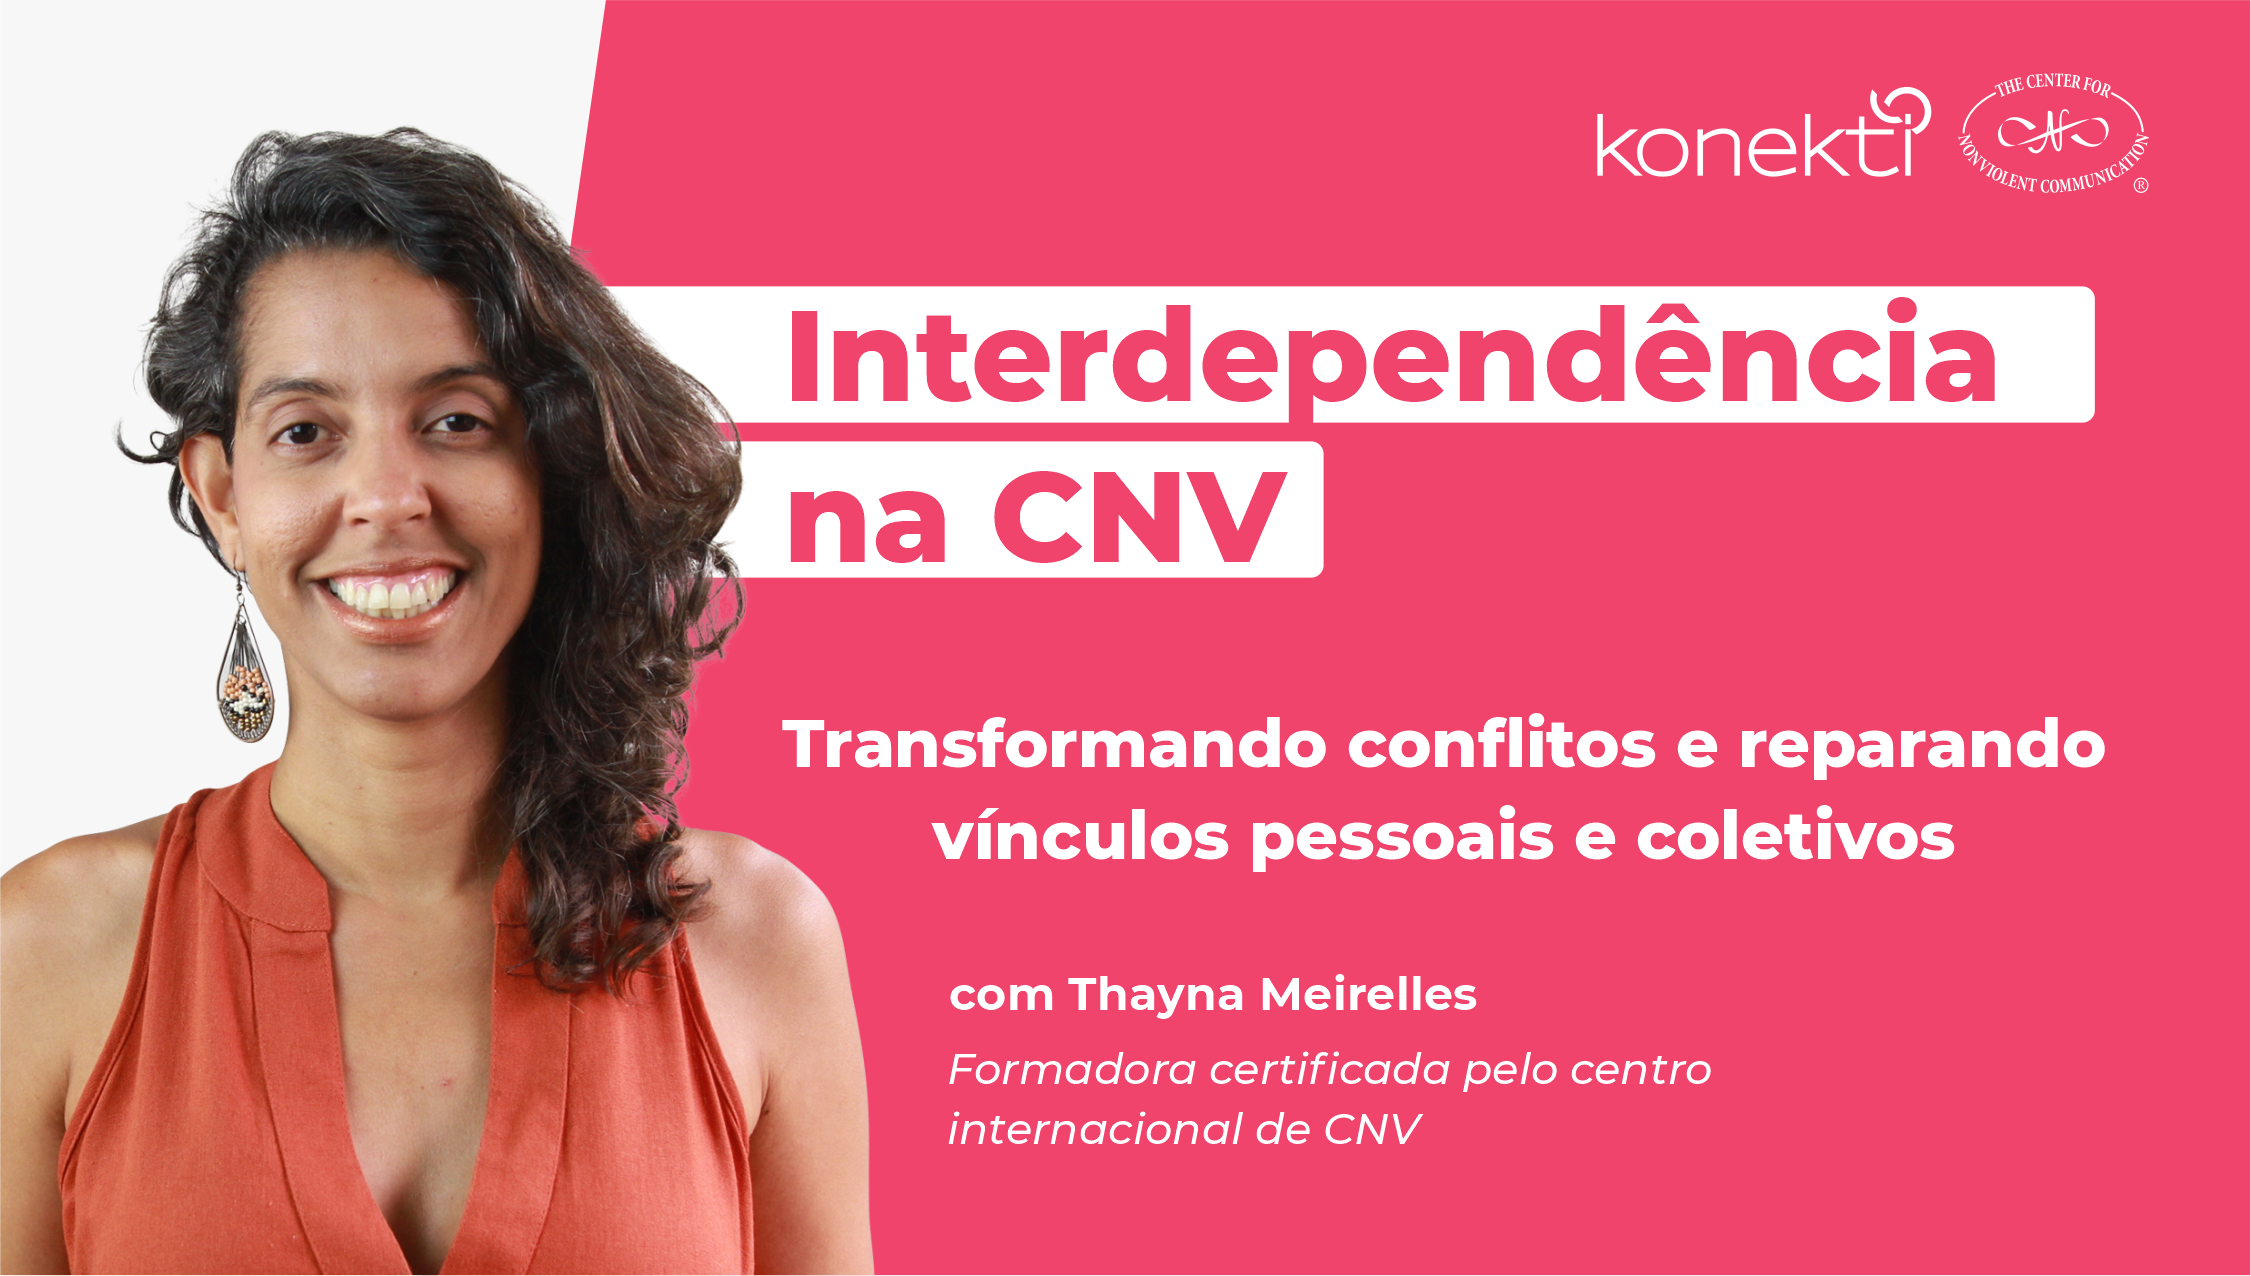 Interdependencia_CNV